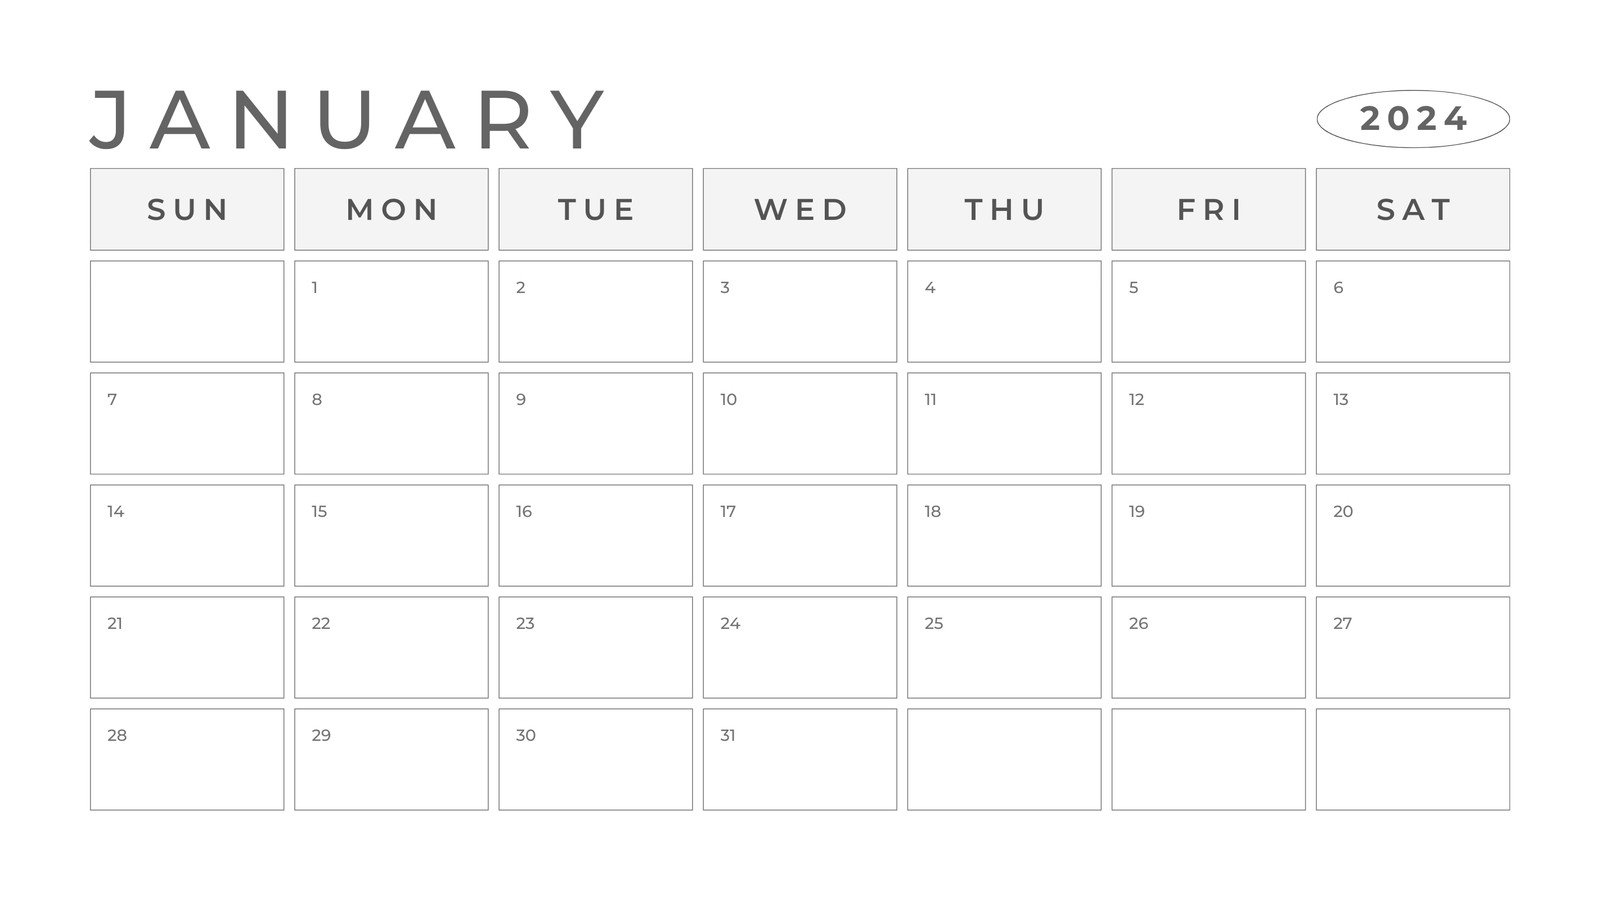 https://marketplace.canva.com/EAFzywKiCQM/1/0/1600w/canva-white-grey-minimalist-simple-2024-monthly-calendar-EyrV4Dpp4vc.jpg